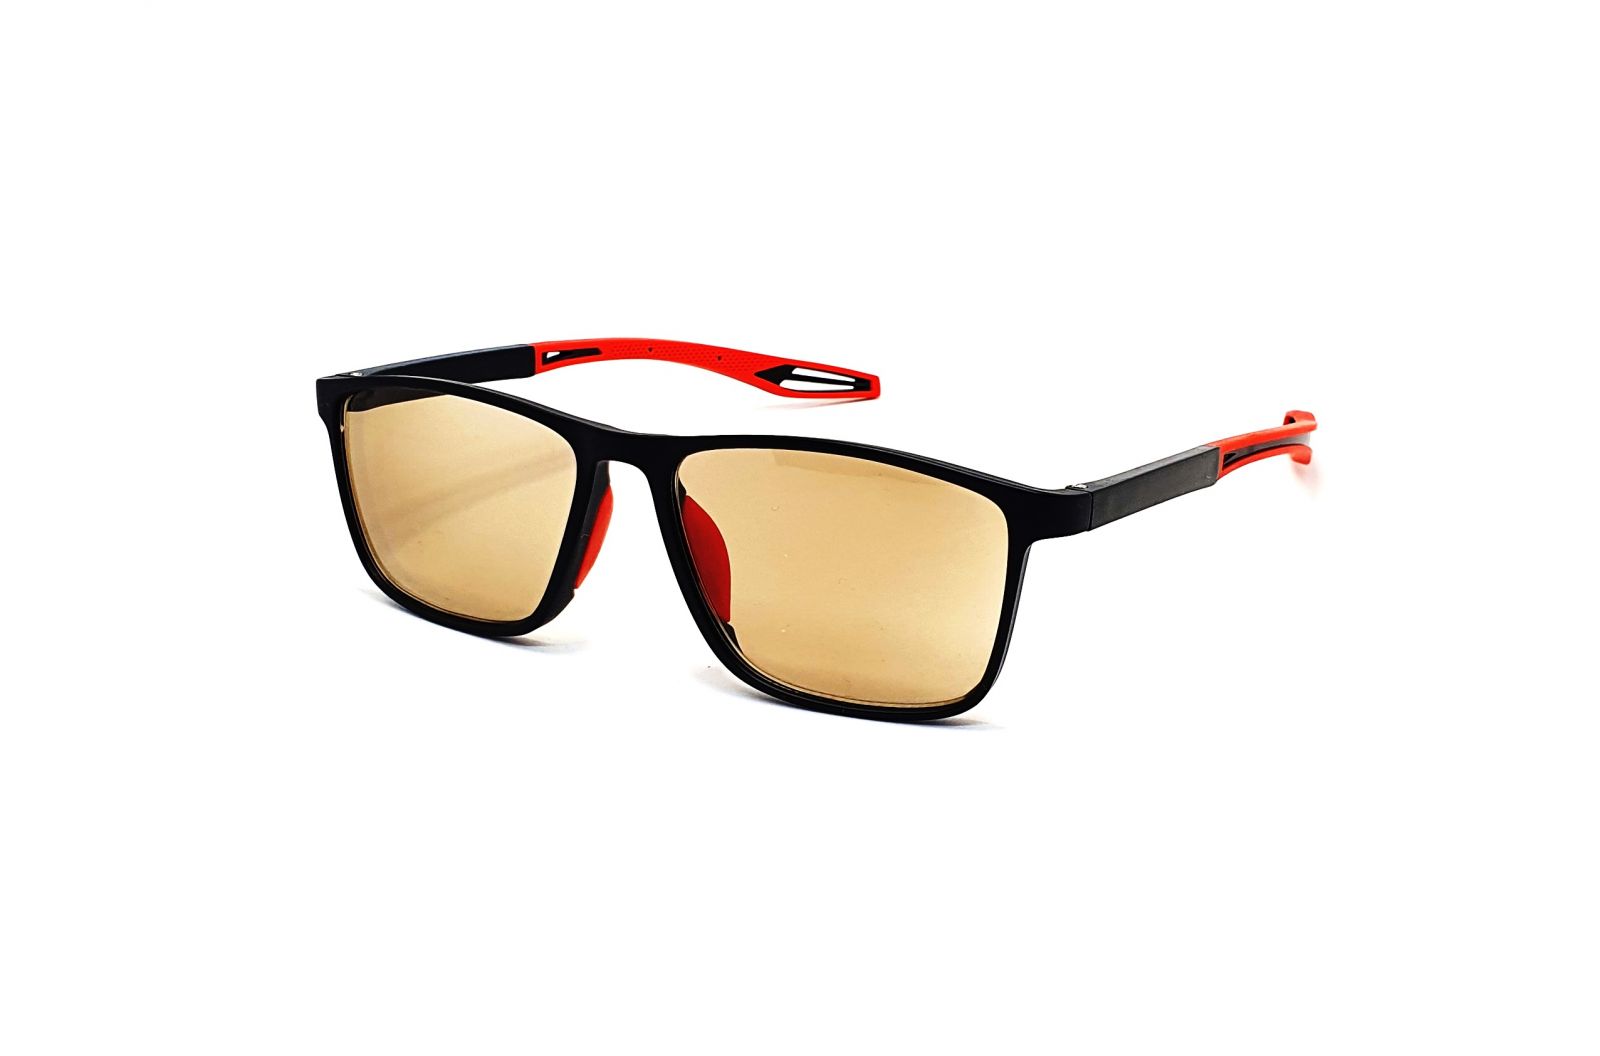 Samozabarvovací dioptrické brýle F04B / -4,00 black/red clear-brown